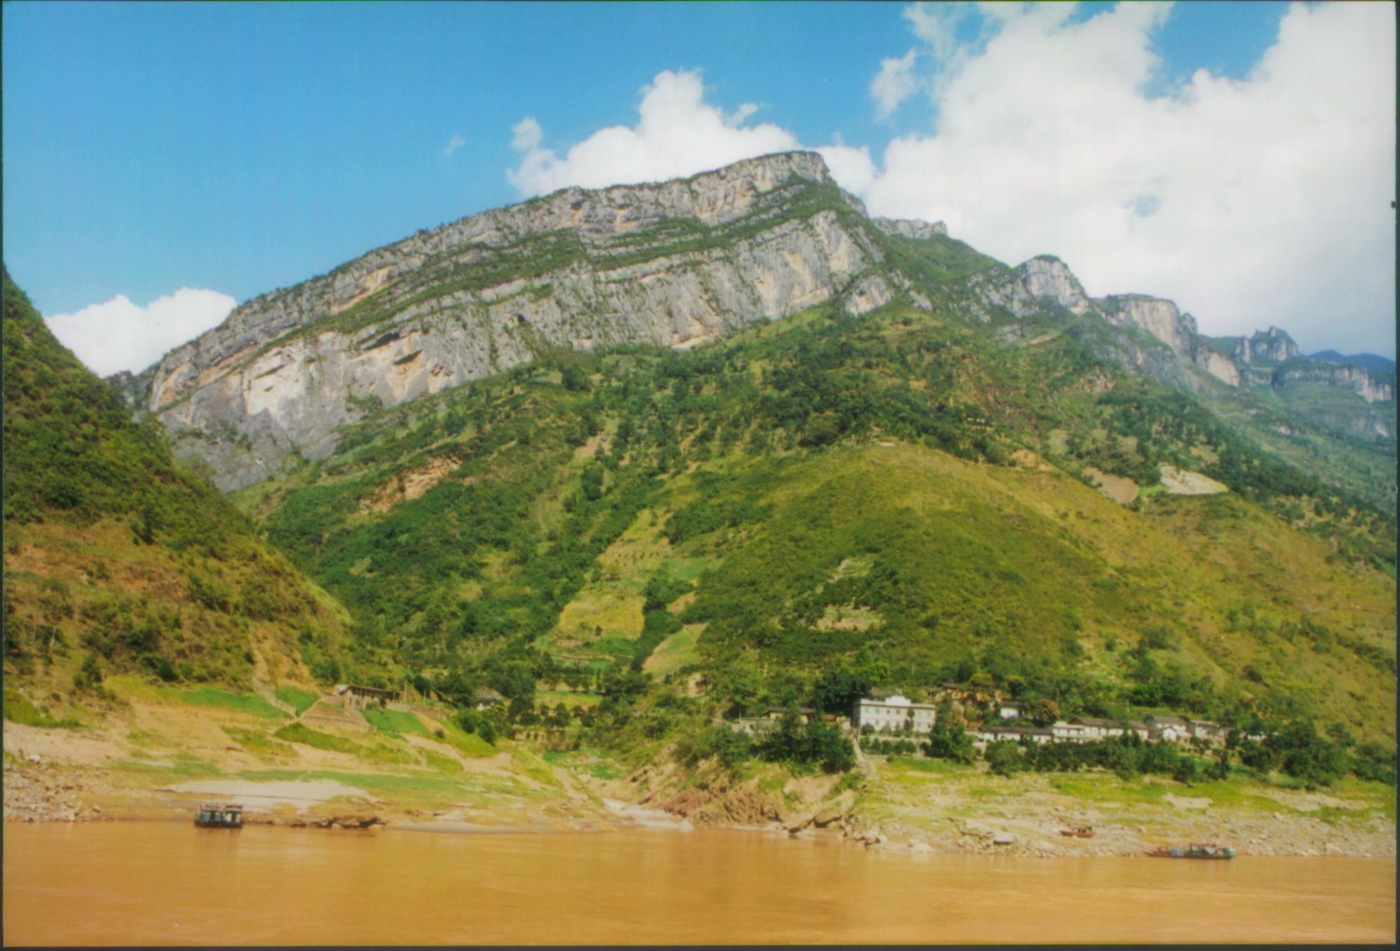 yangtze river China in 1999 before three gorges dam 